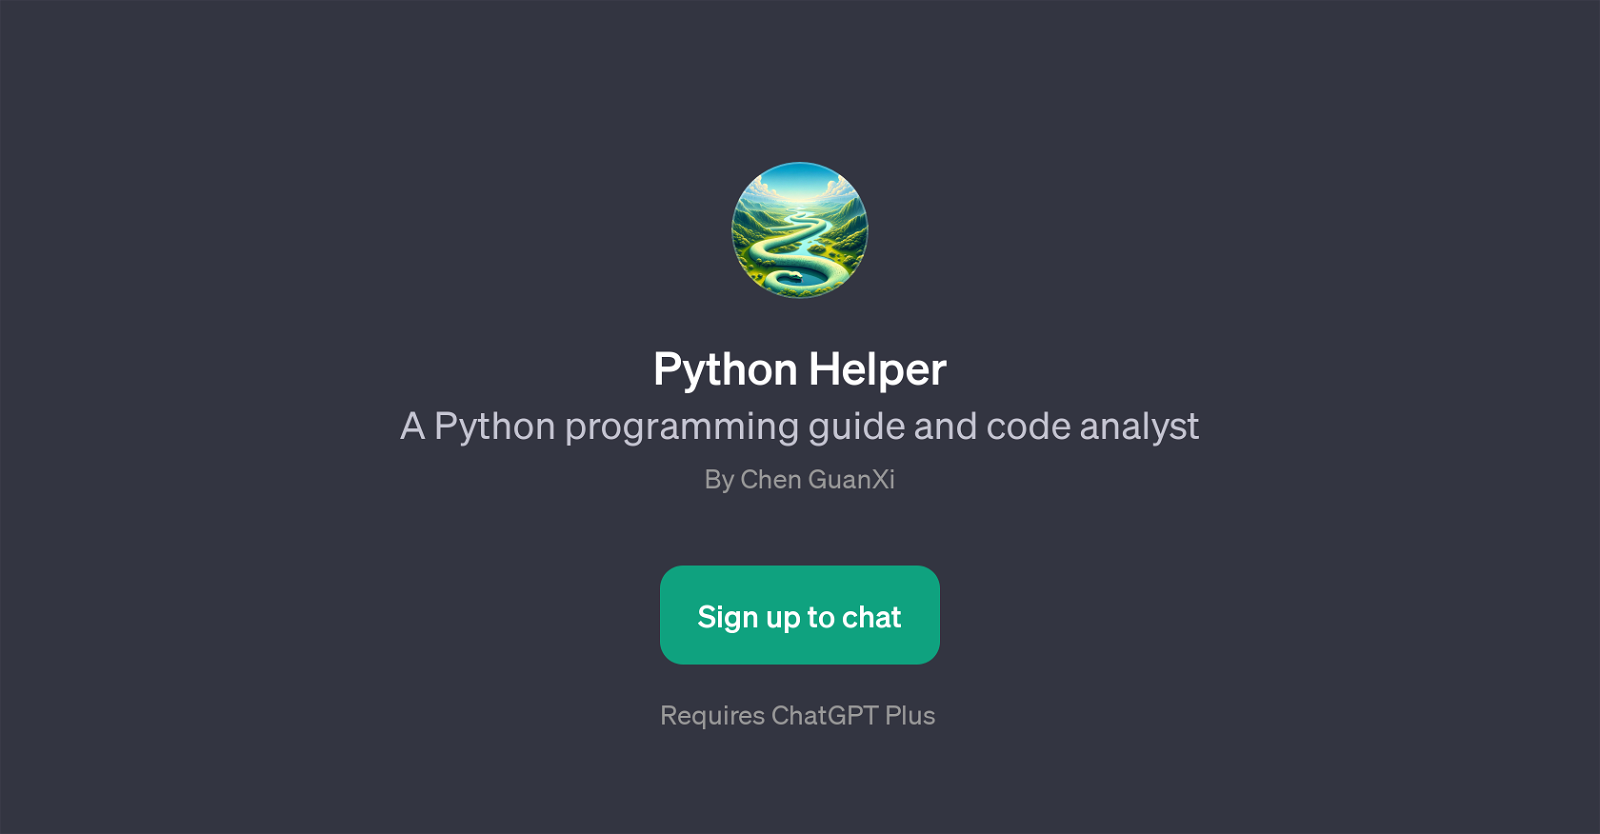 Python Helper website